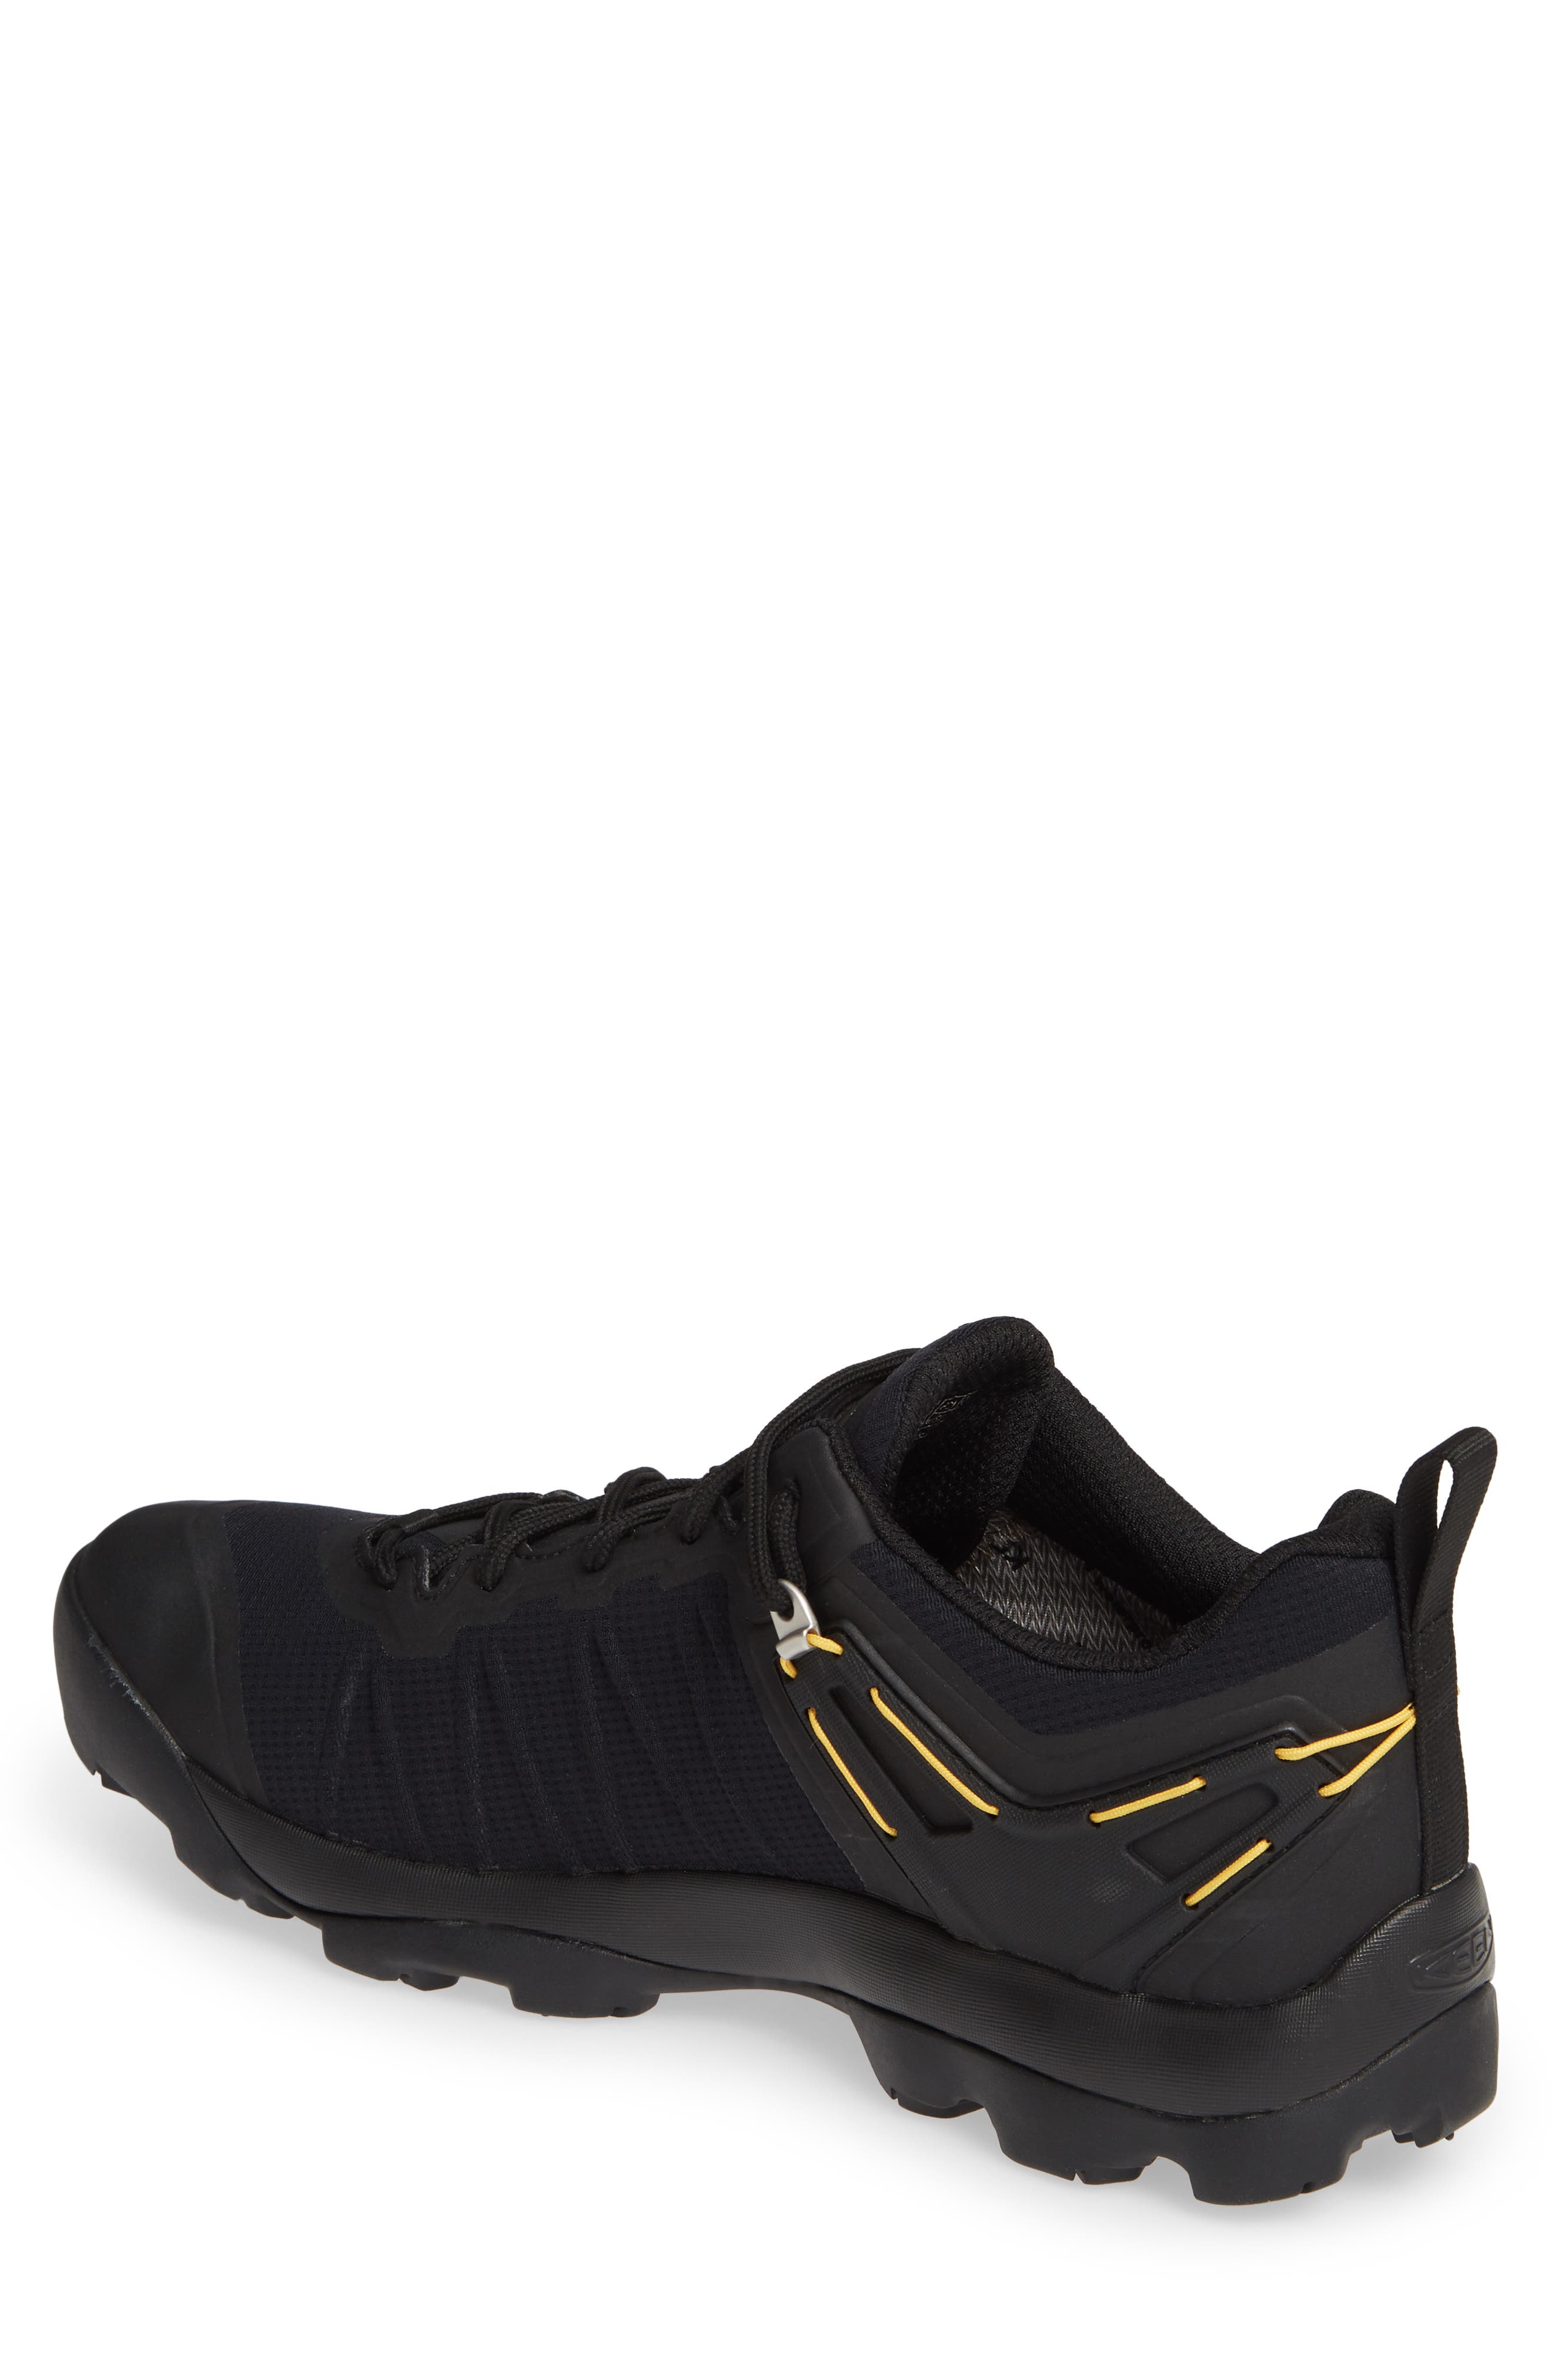 Black/Keen Yellow Keen Venture Mens Waterproof Hiking Shoes 